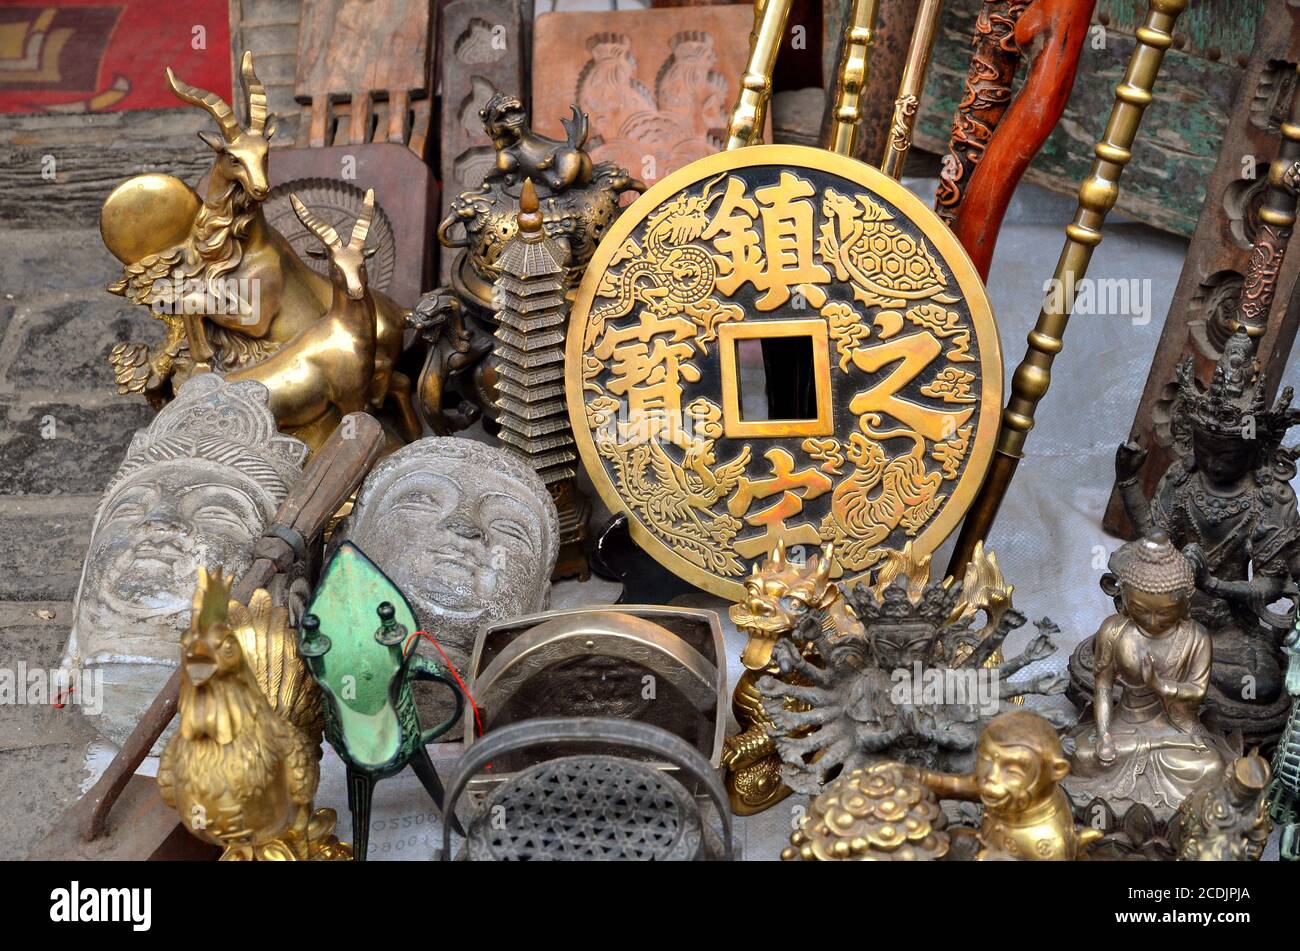 PINGYAO, CHINA - 7. Mai 2017 - Alte Metall-Souvenirs und Dekoration aus China auf dem Markt in Pingyao Stockfoto